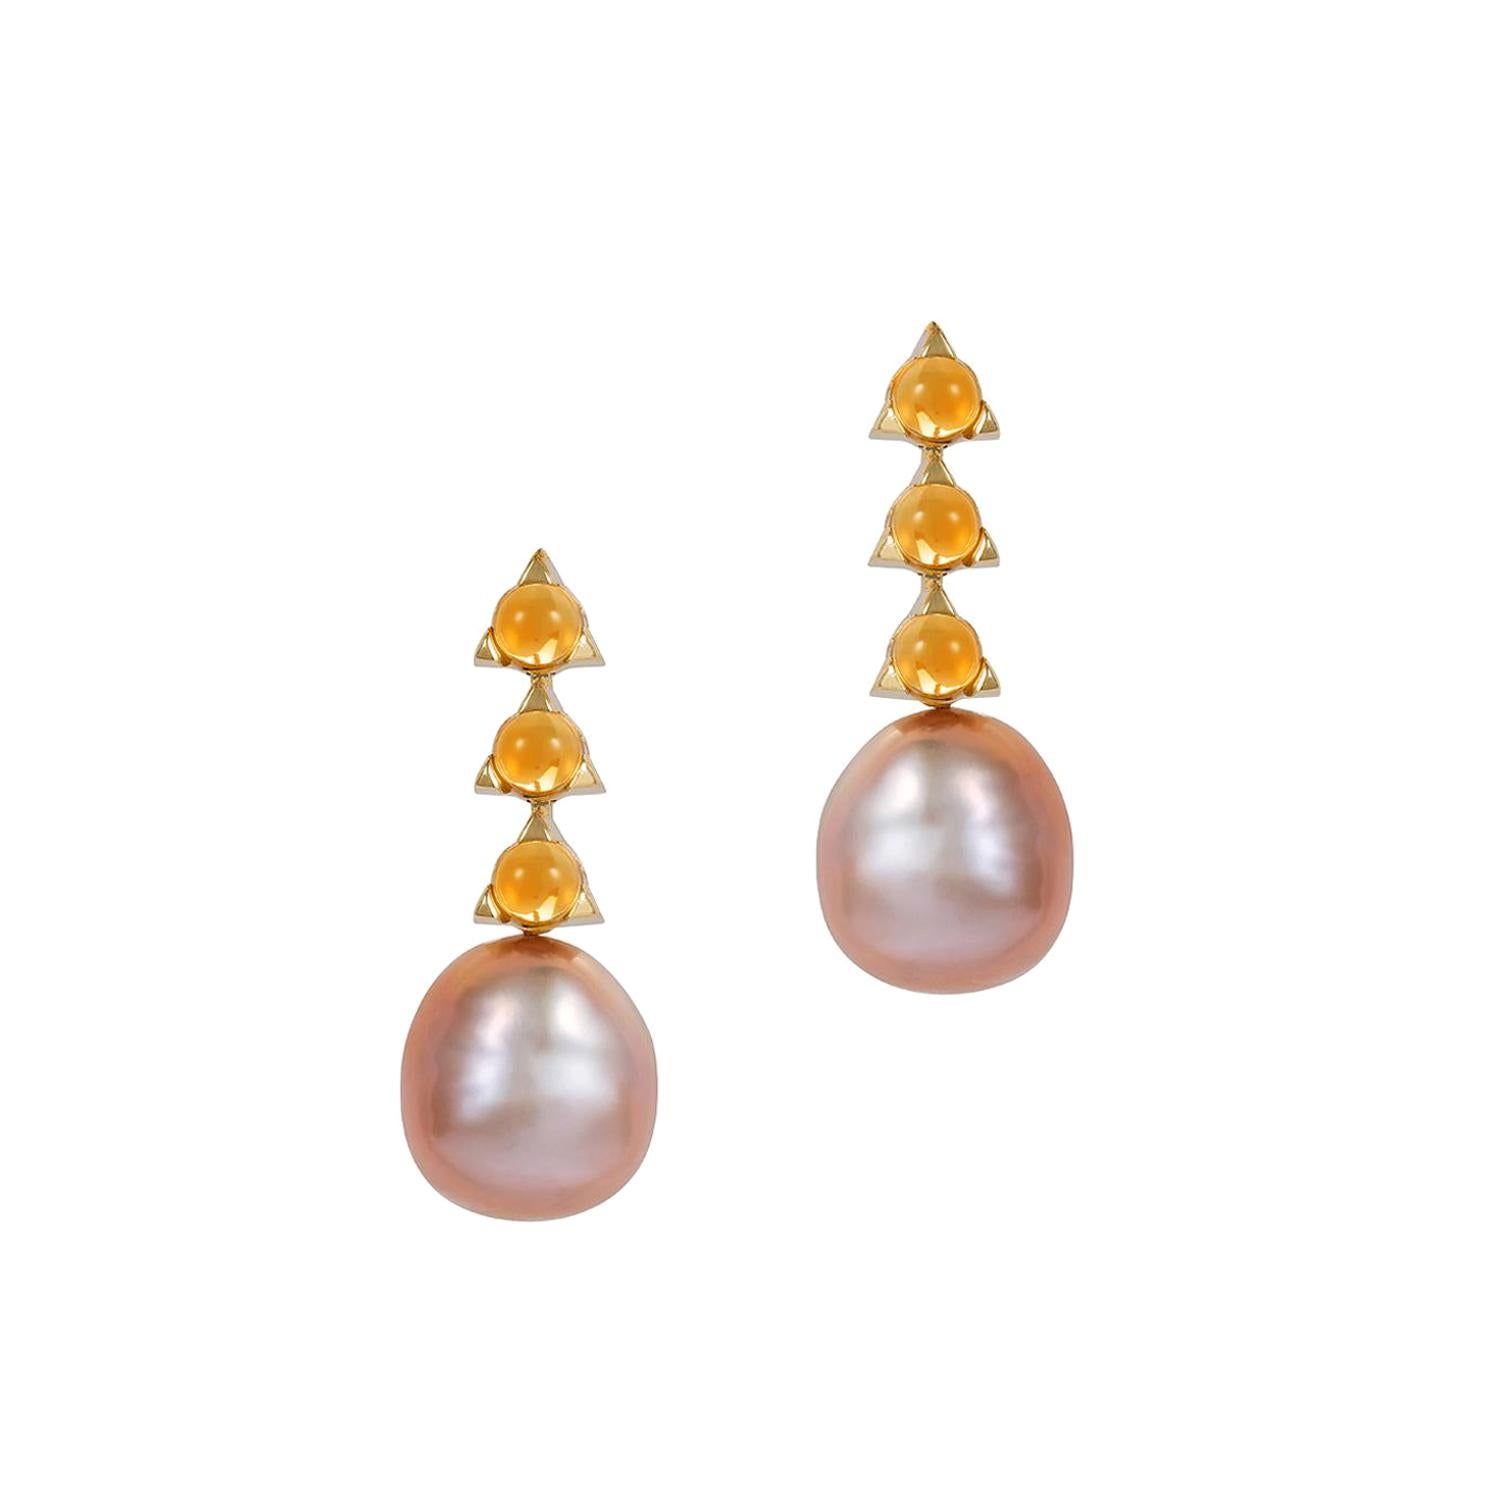 MAVIADA's 3-4mm Stone Baroque Violet Pearl Earrings, Citrine, 18 K Yellow Gold